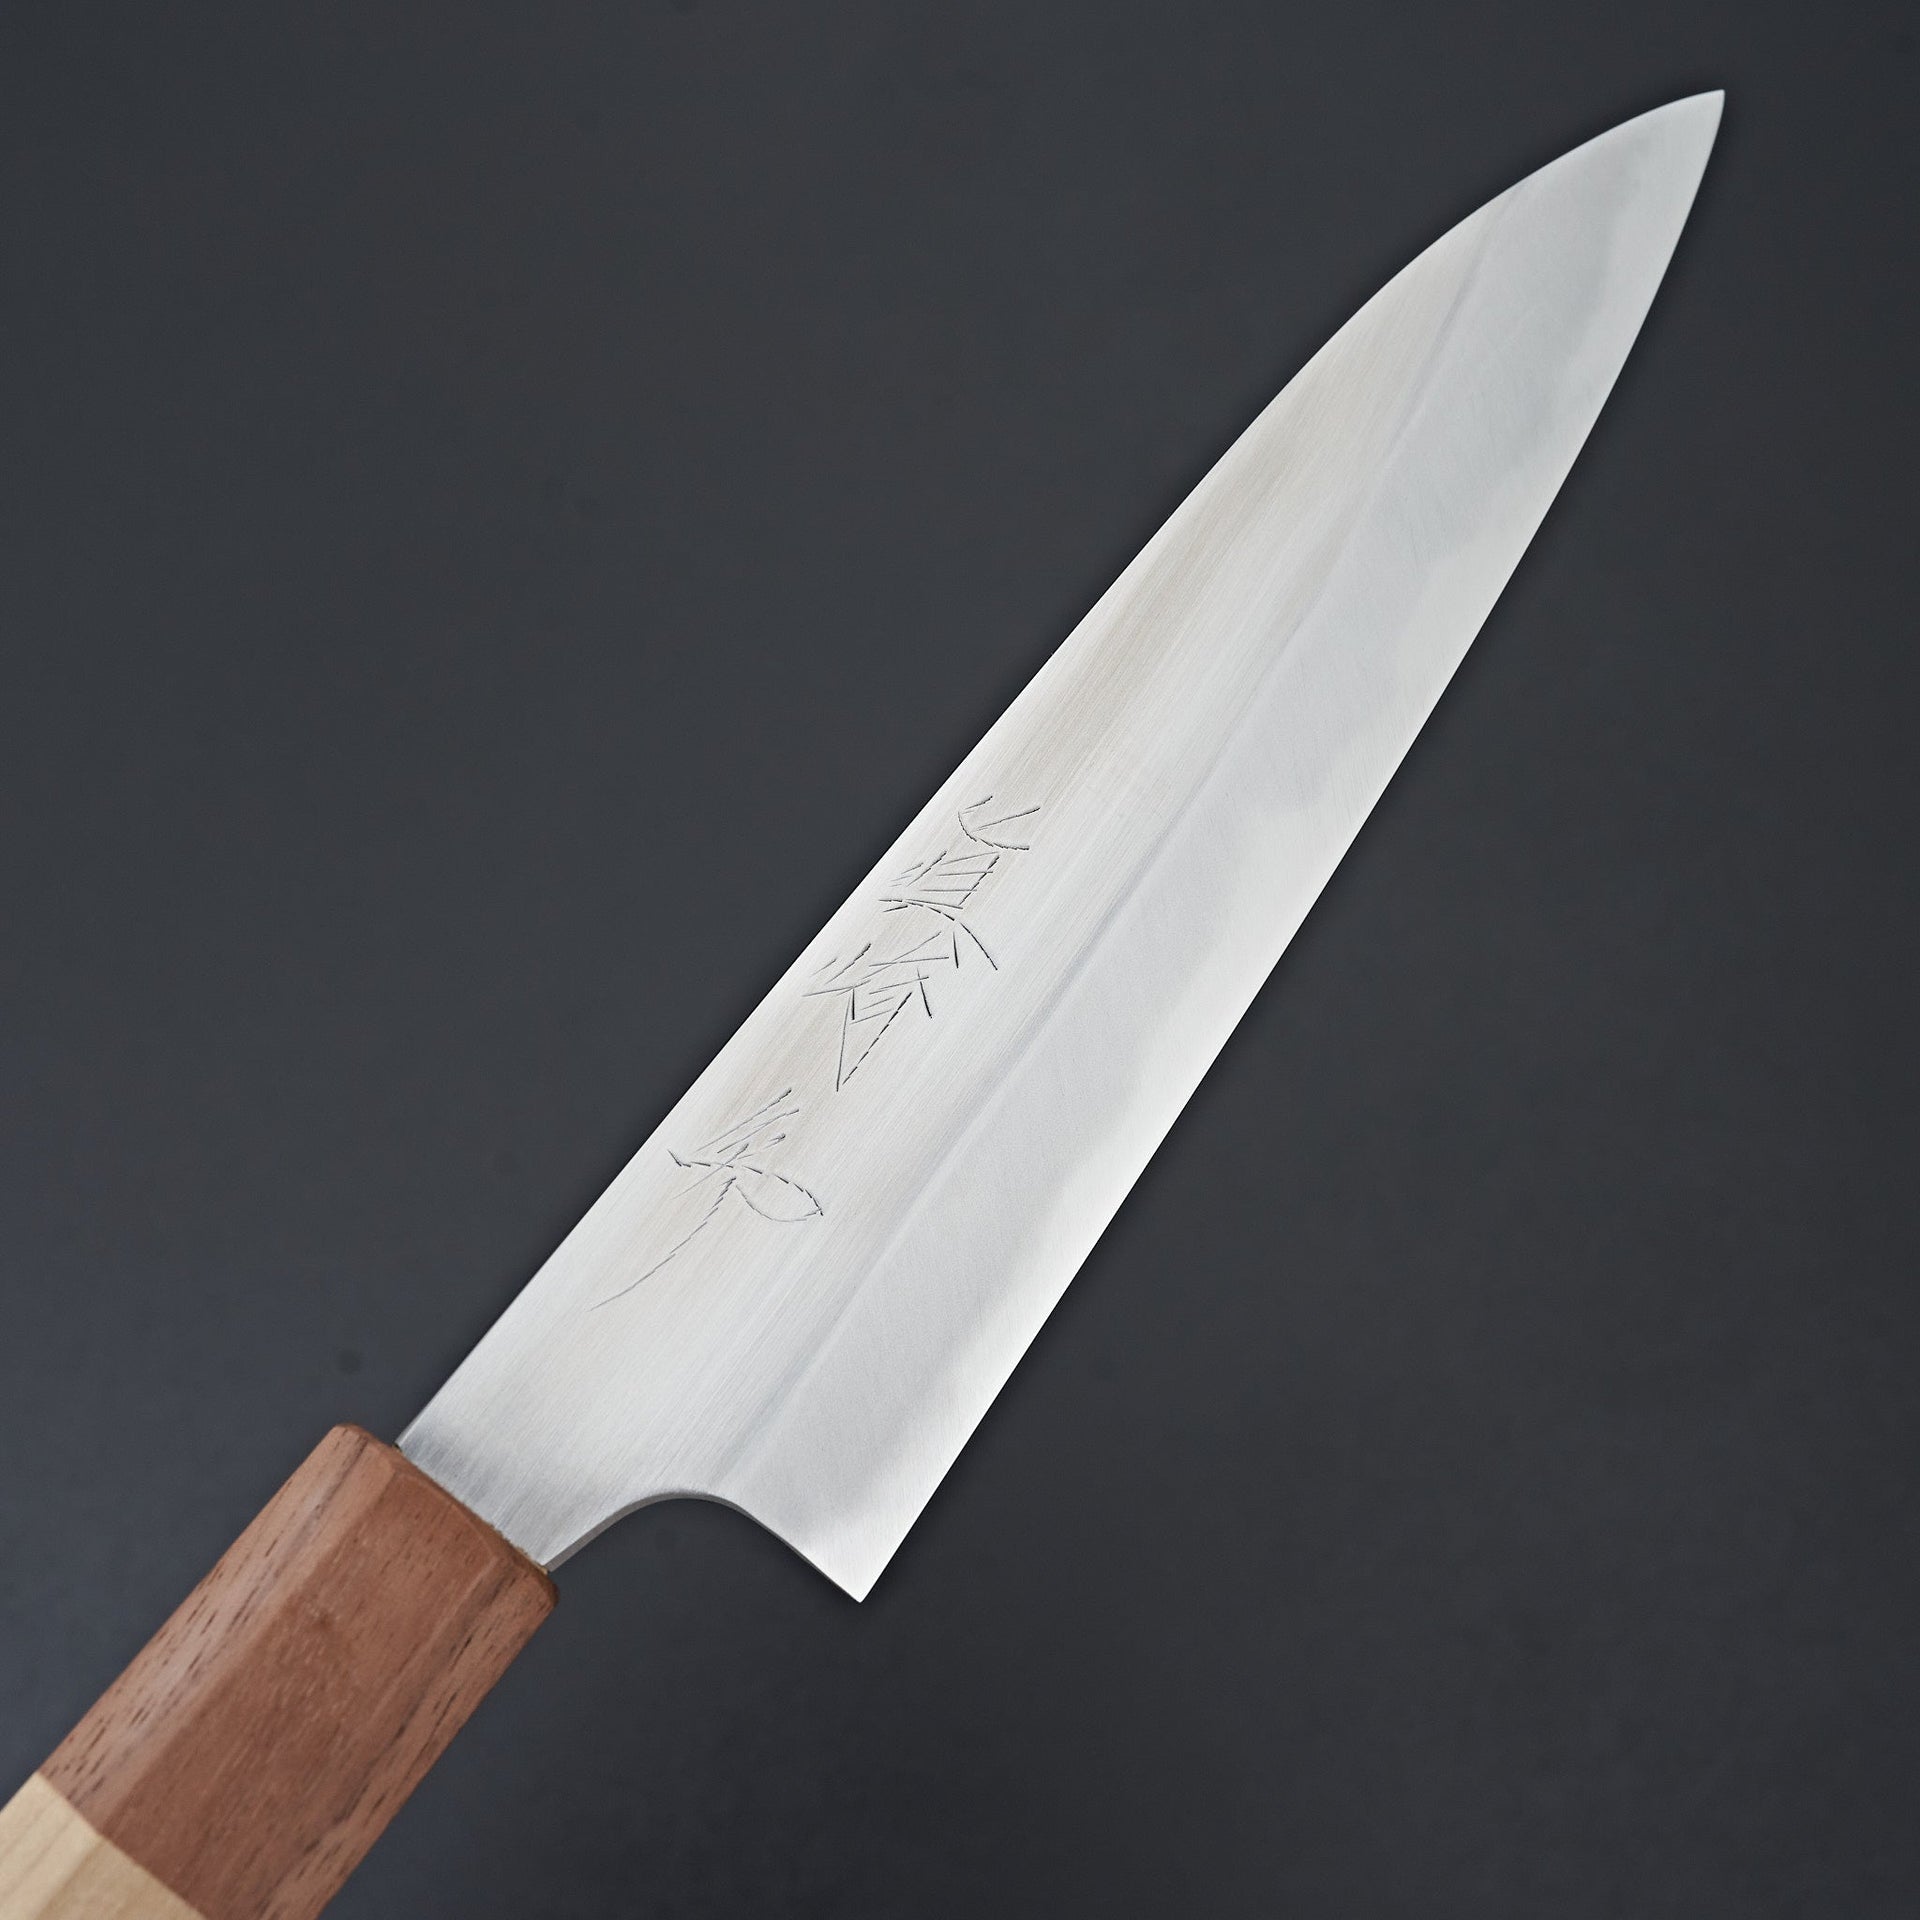 Mazaki White#2 Kasumi Petty 180mm-Knife-Mazaki-Carbon Knife Co